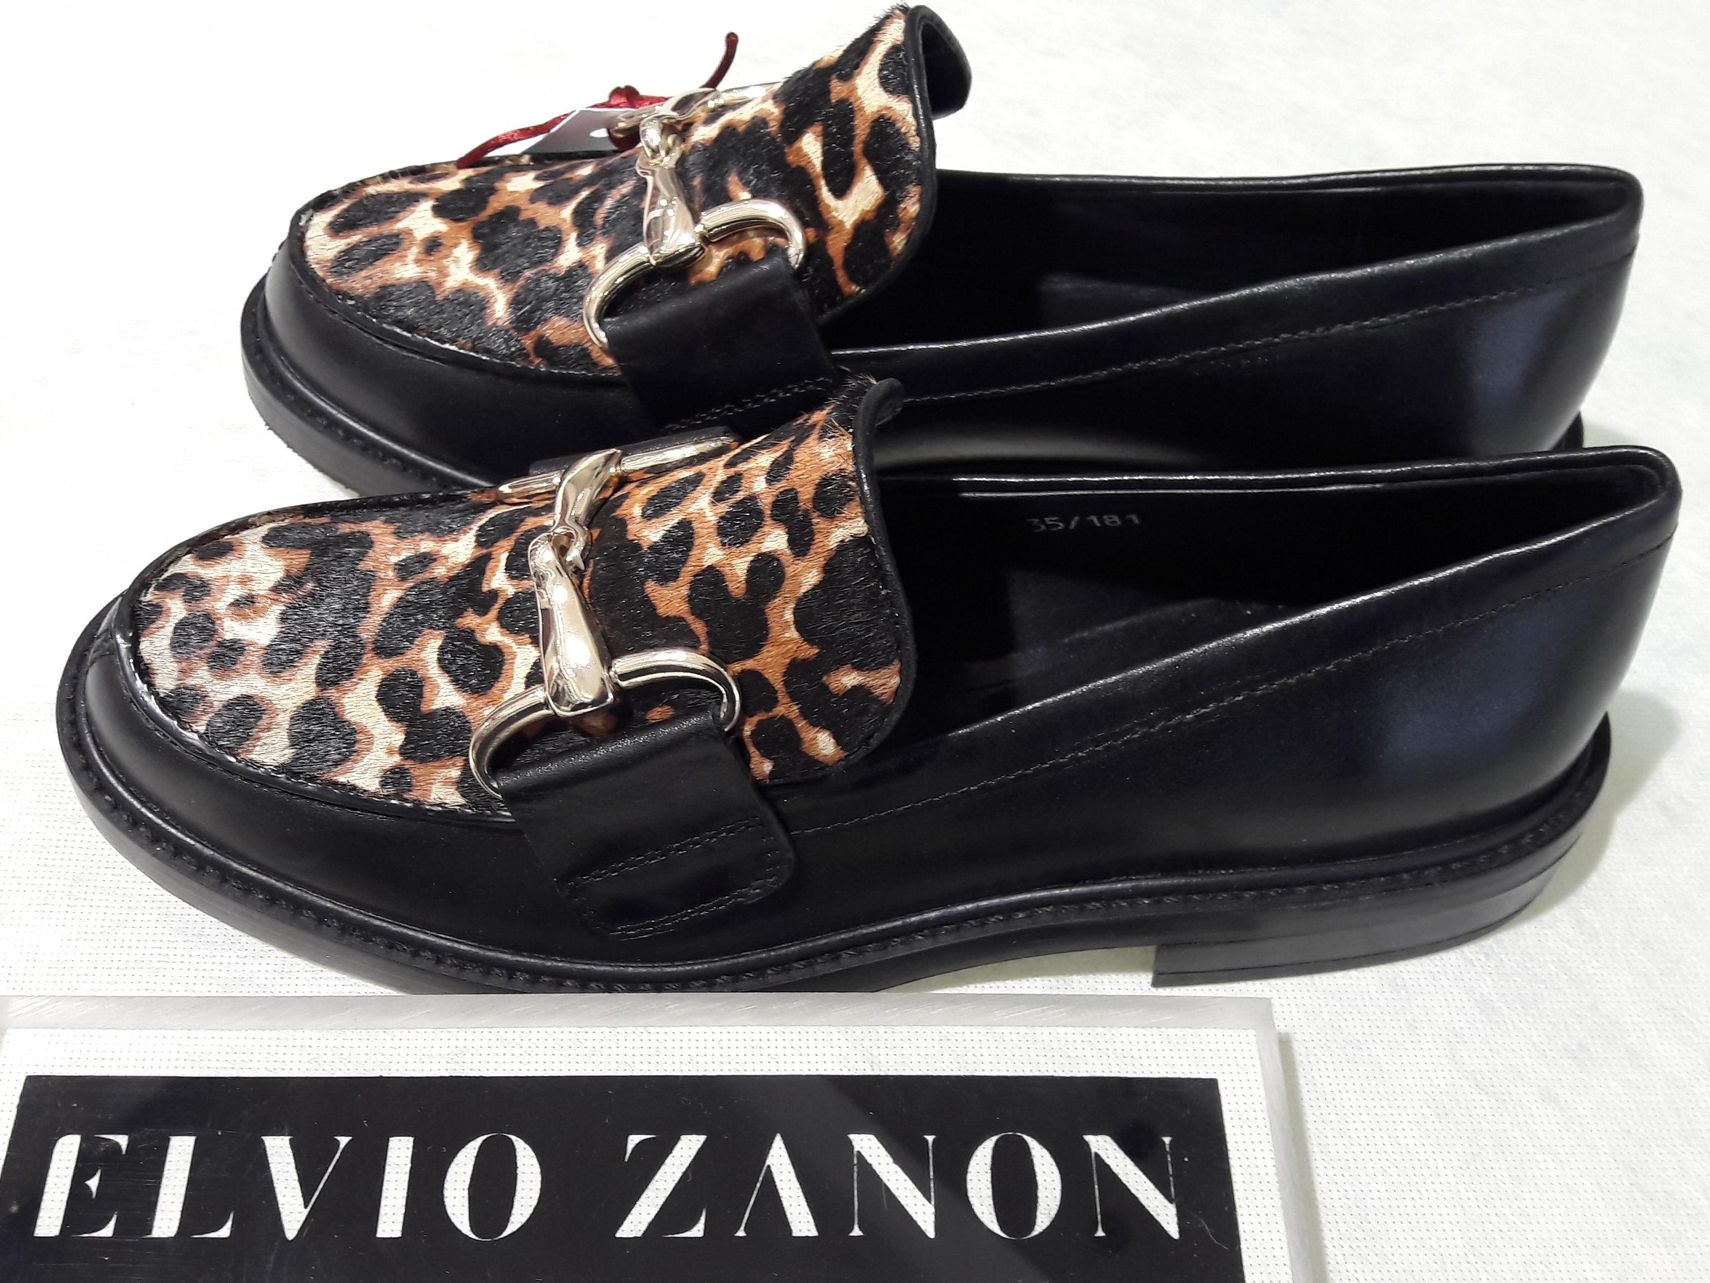 elvio zanon scarpe shop online